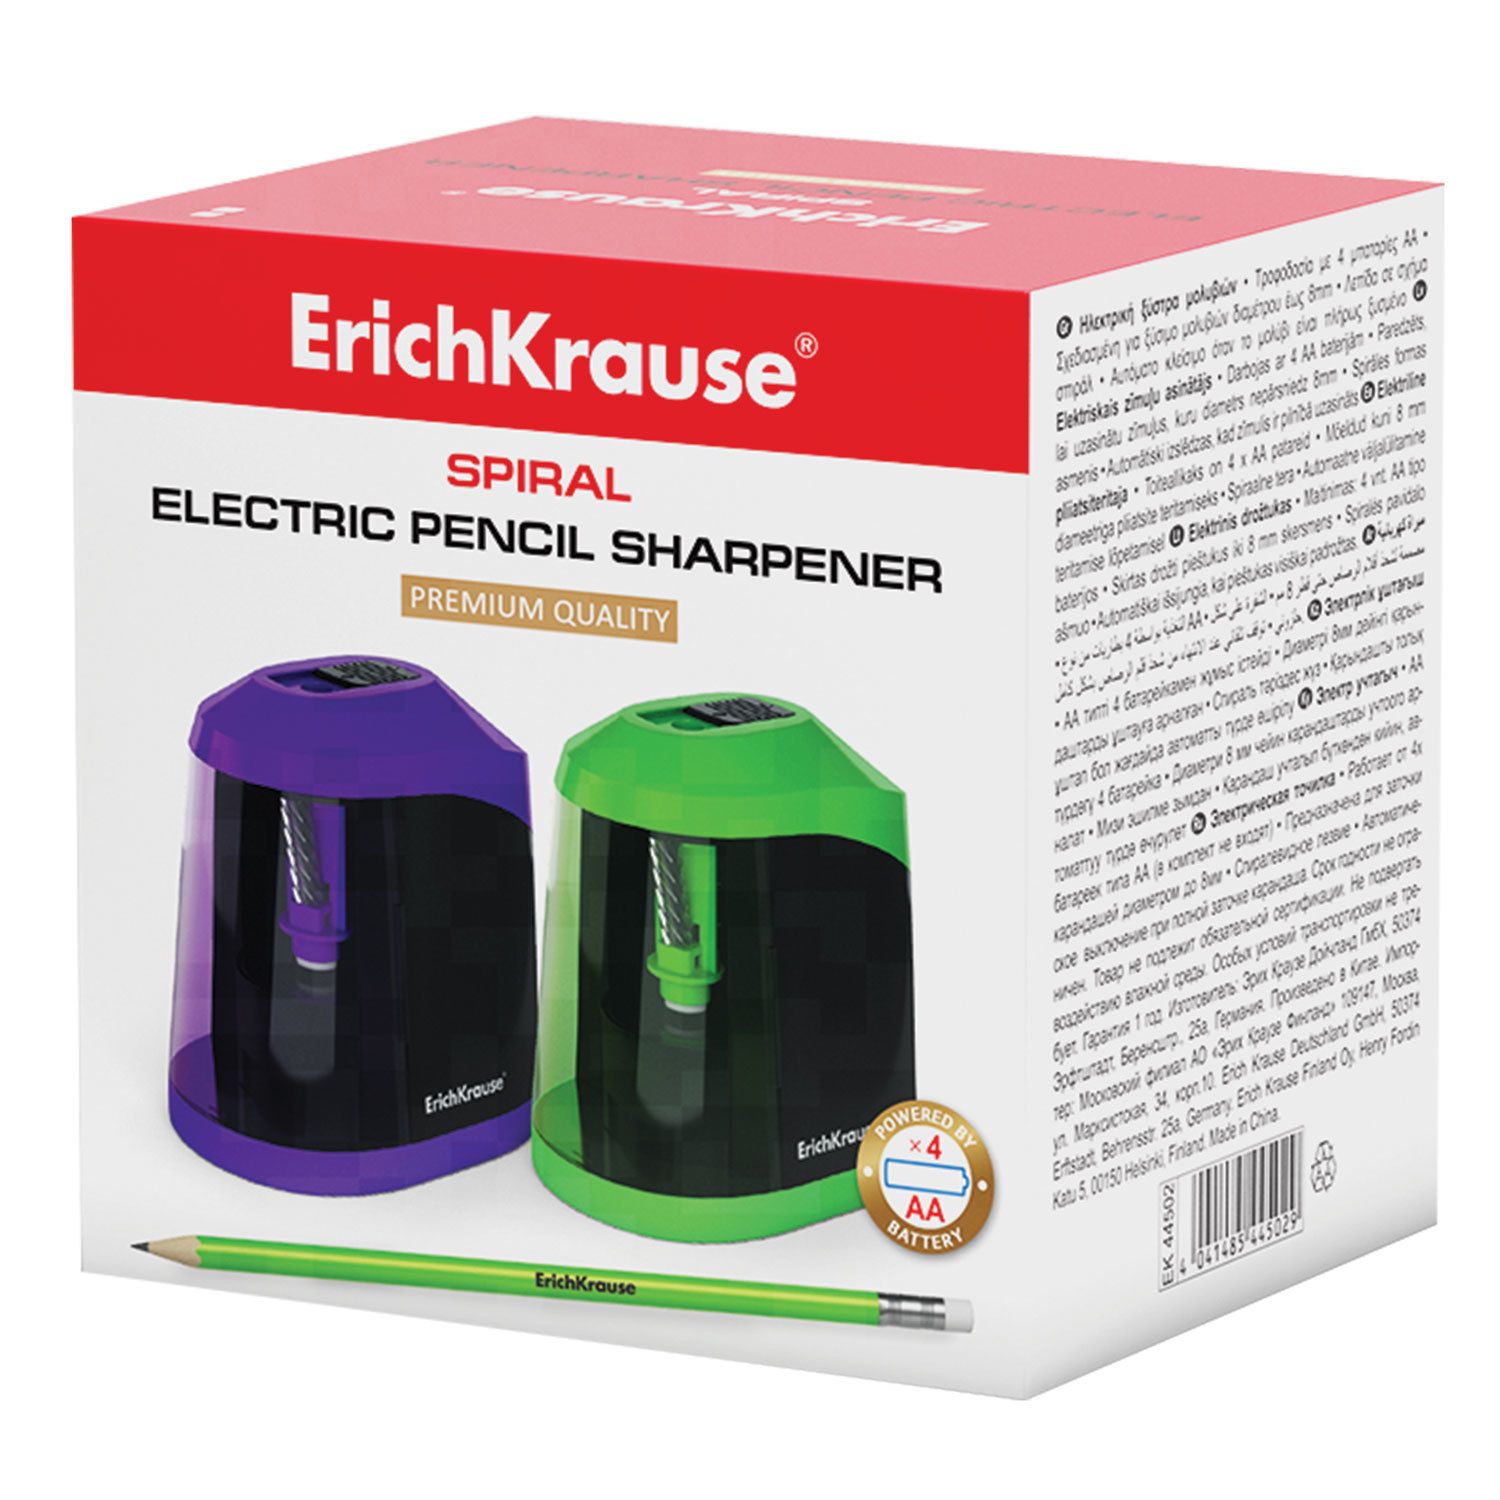 Точилка электрическая ERICH KRAUSE "Spiral", питание от 4 батареек АА, цвет корпуса ассорти, 44502